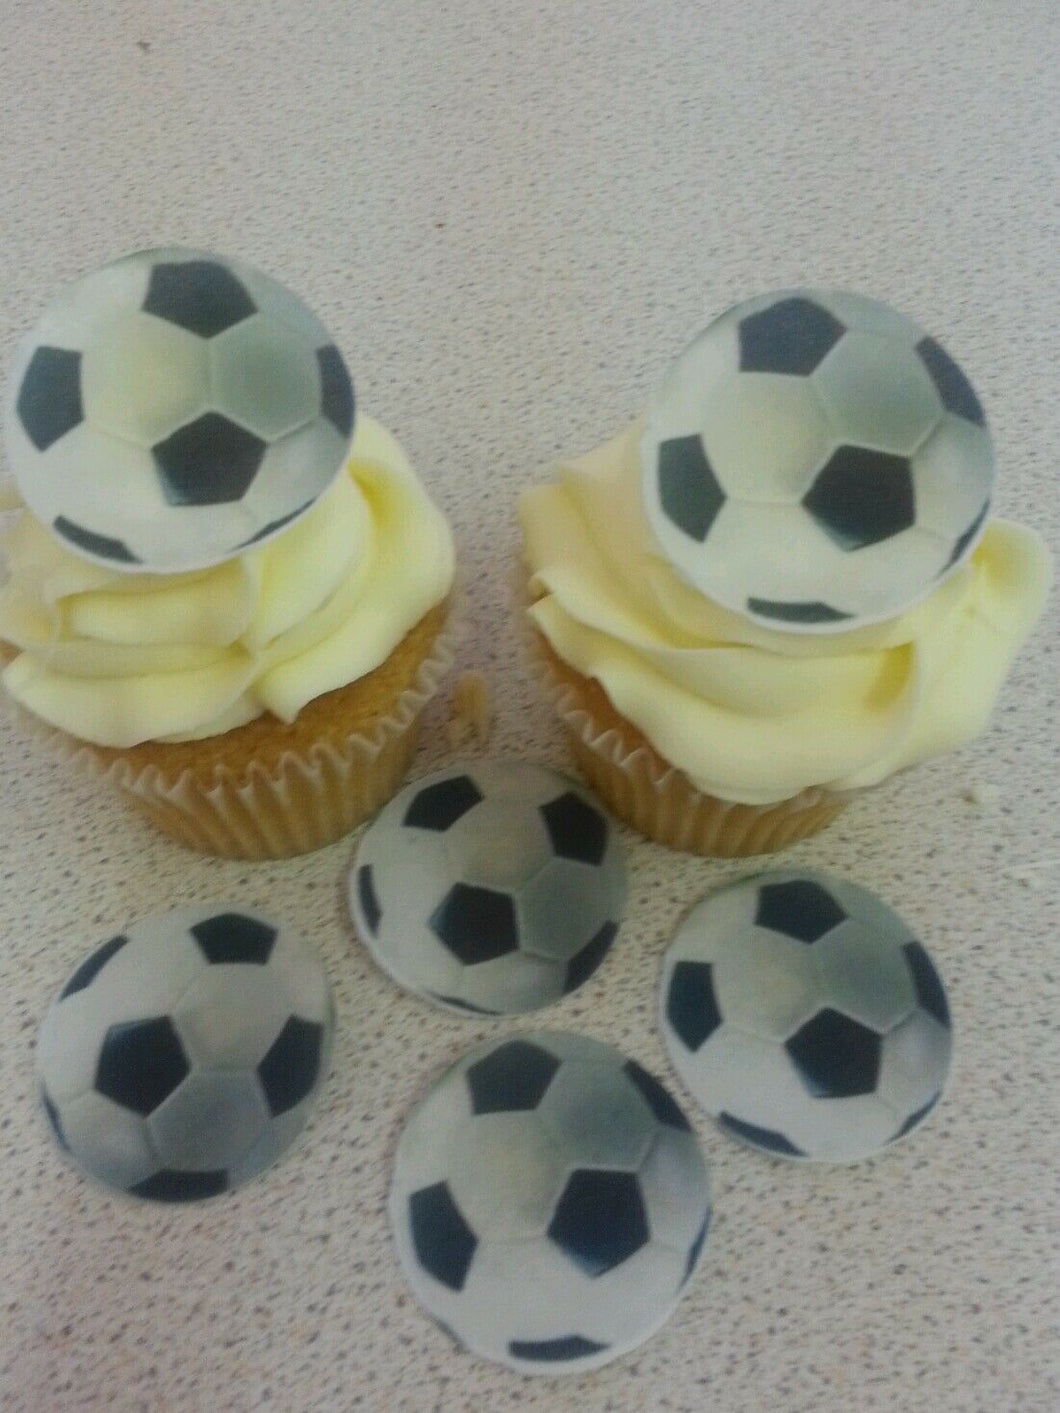 12 PRECUT Edible Footballs wafer/rice paper cake/cupcake toppers